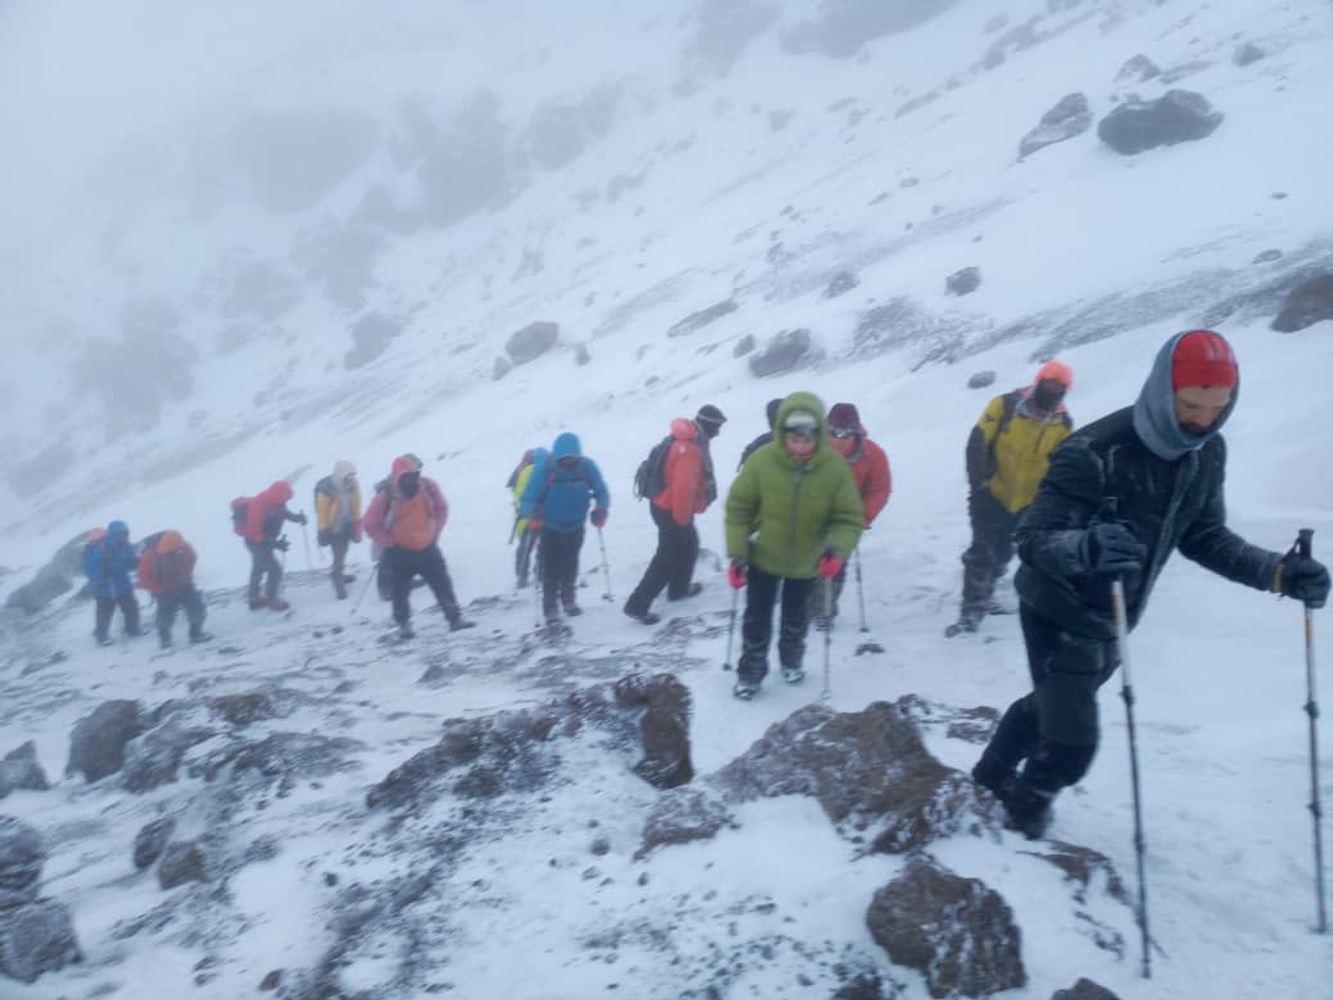 Epic Kilimanjaro climbing through Machame route booking is open